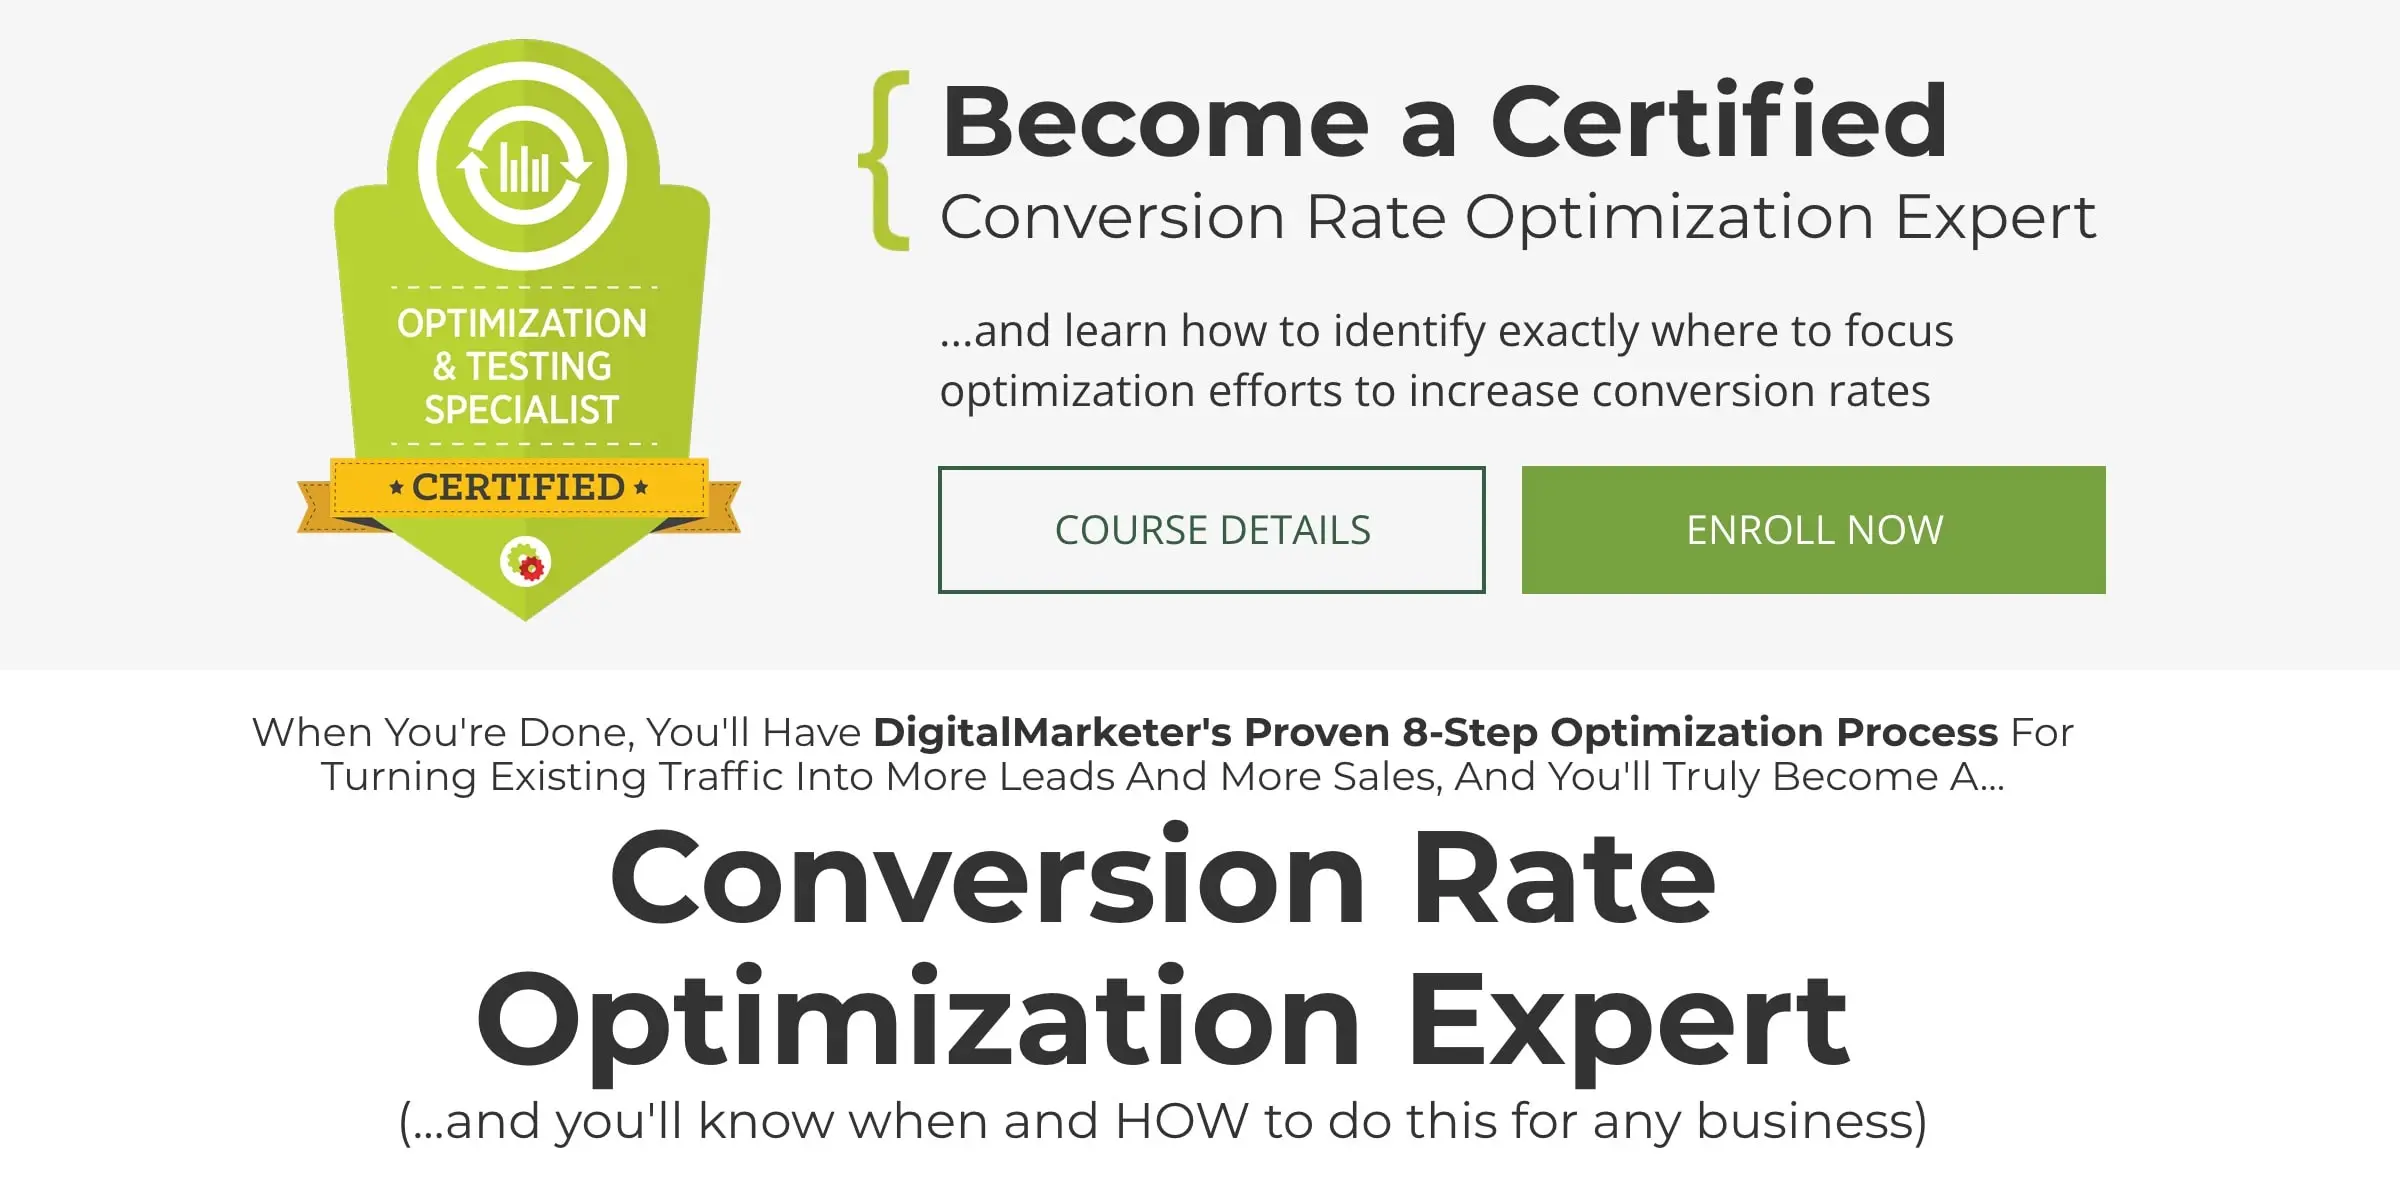 Certified Conversion Rate Optimization Specialist (Digital Marketer)